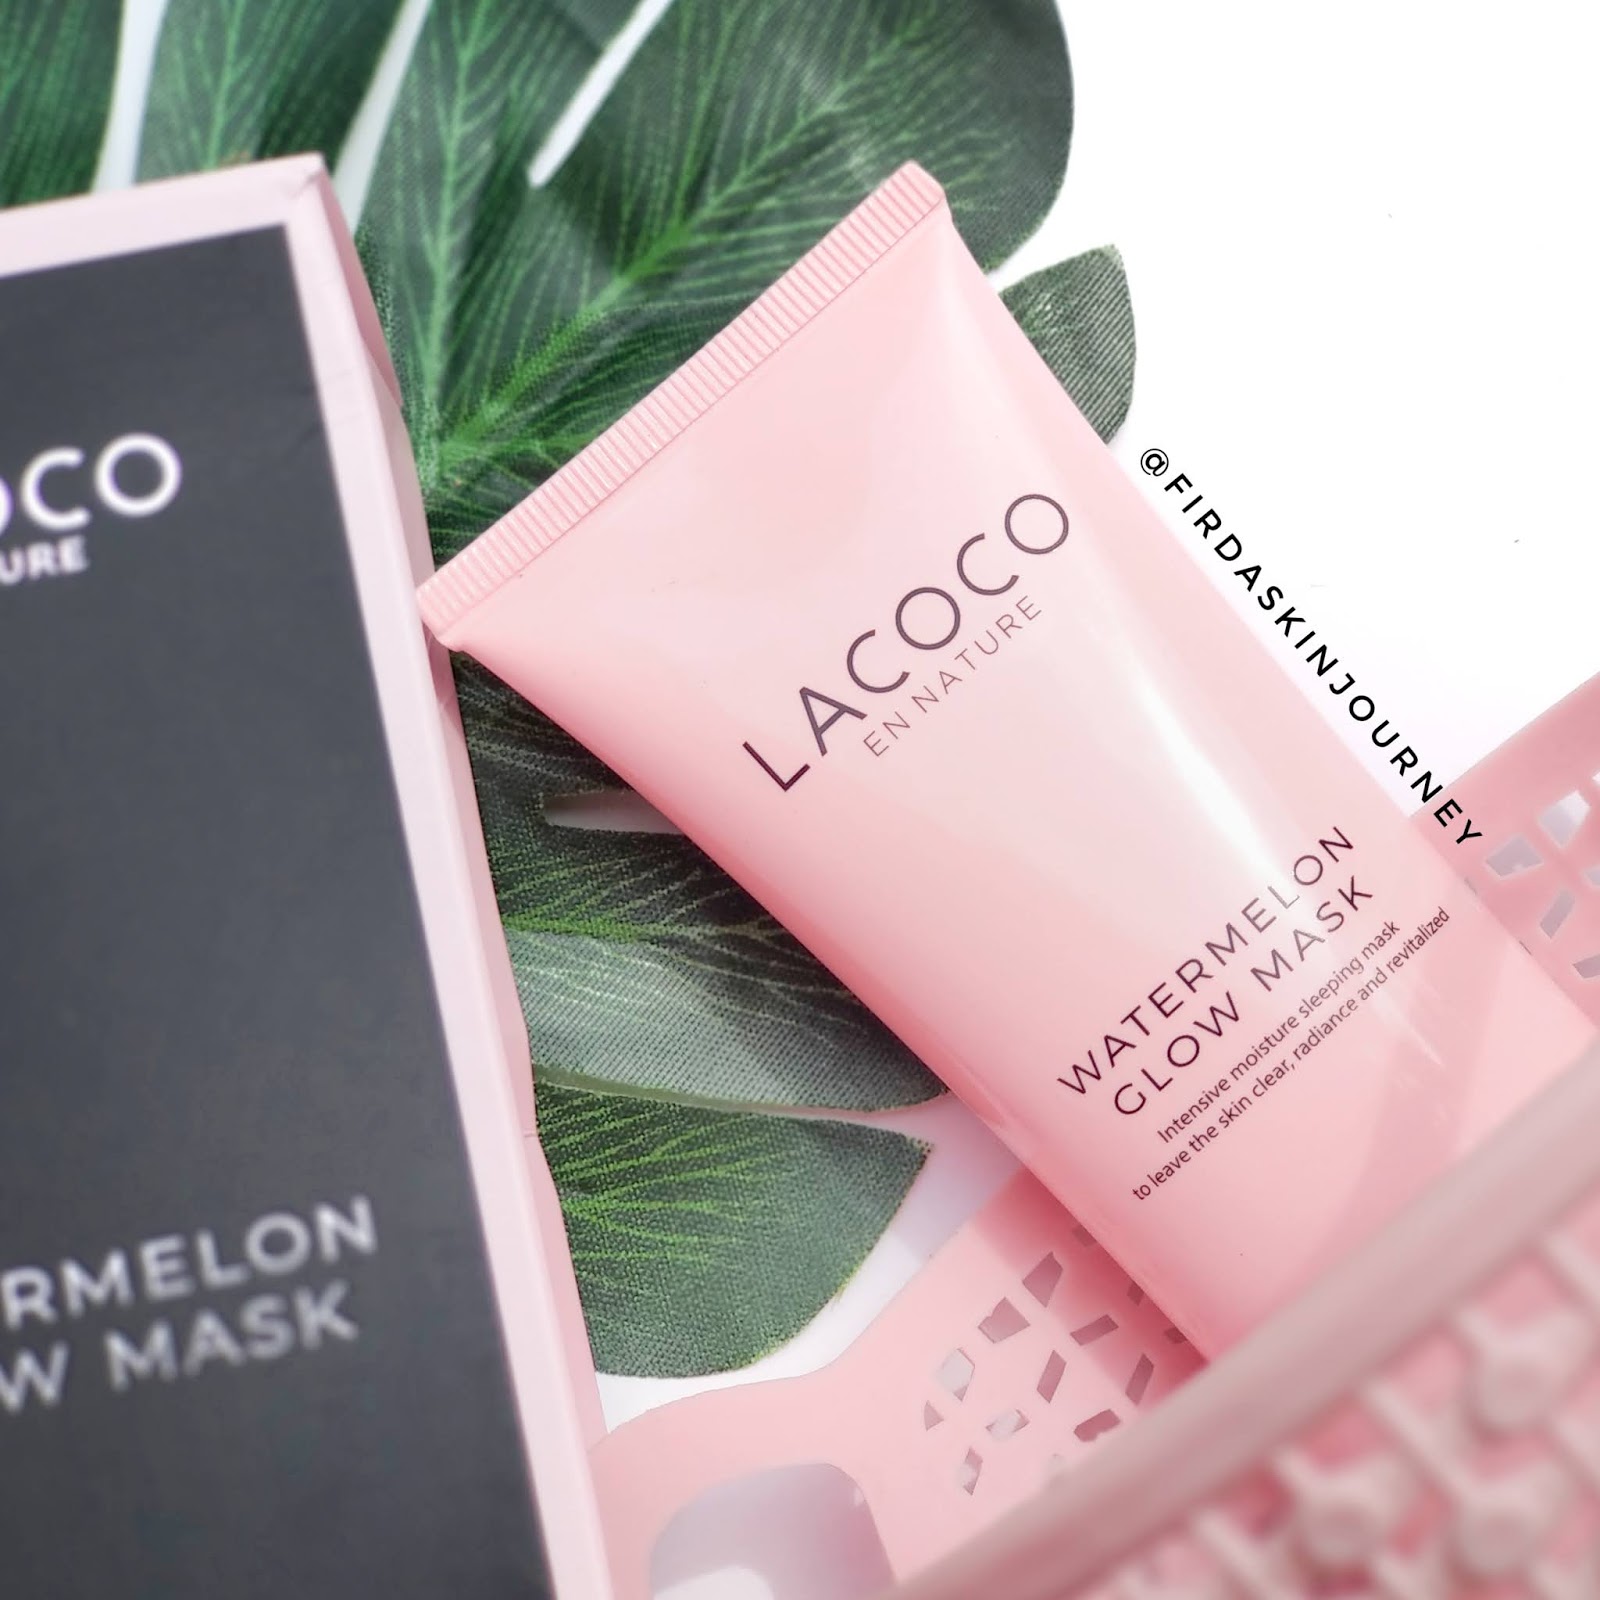 Review: Lacoco Watermelon Glow Mask